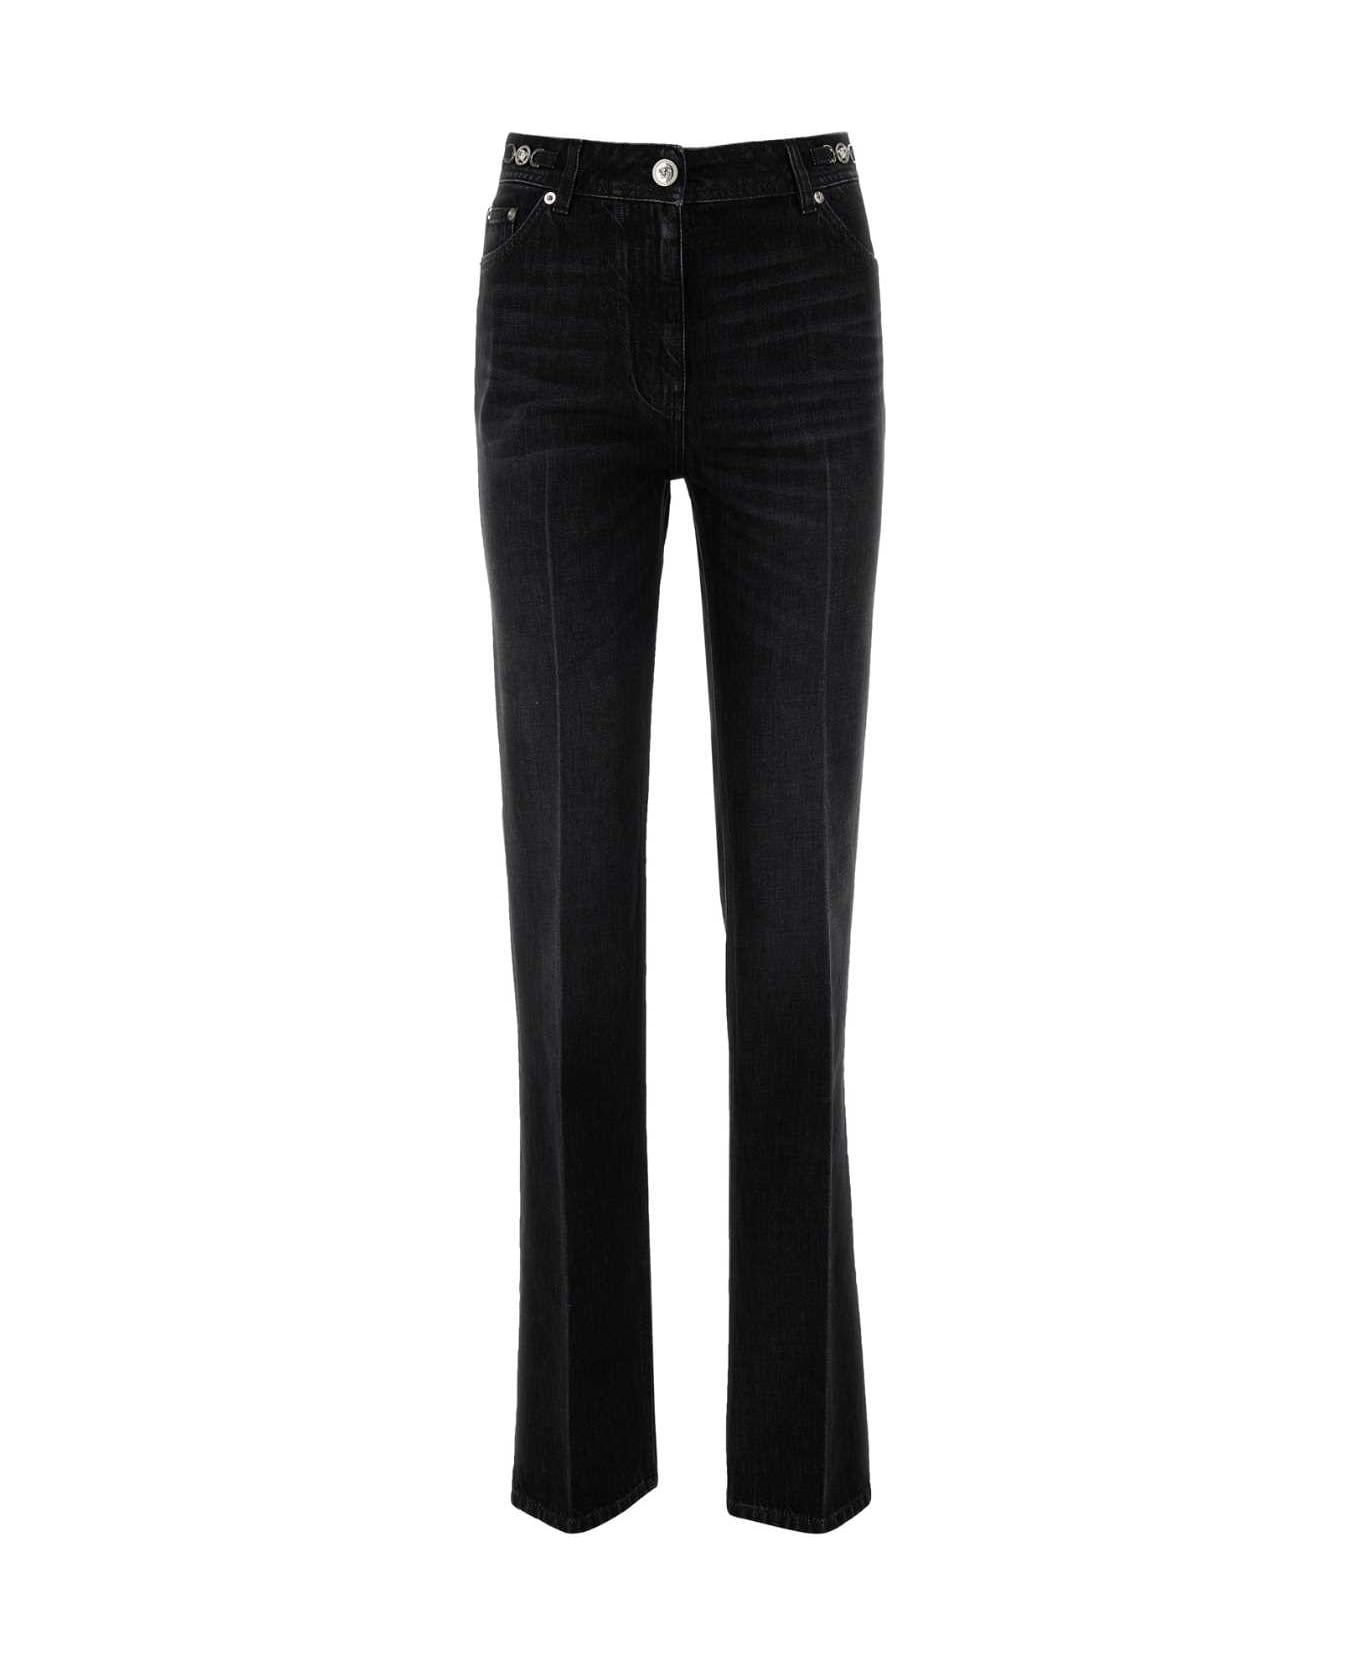 Versace Black Denim Jeans - MIDGREY デニム